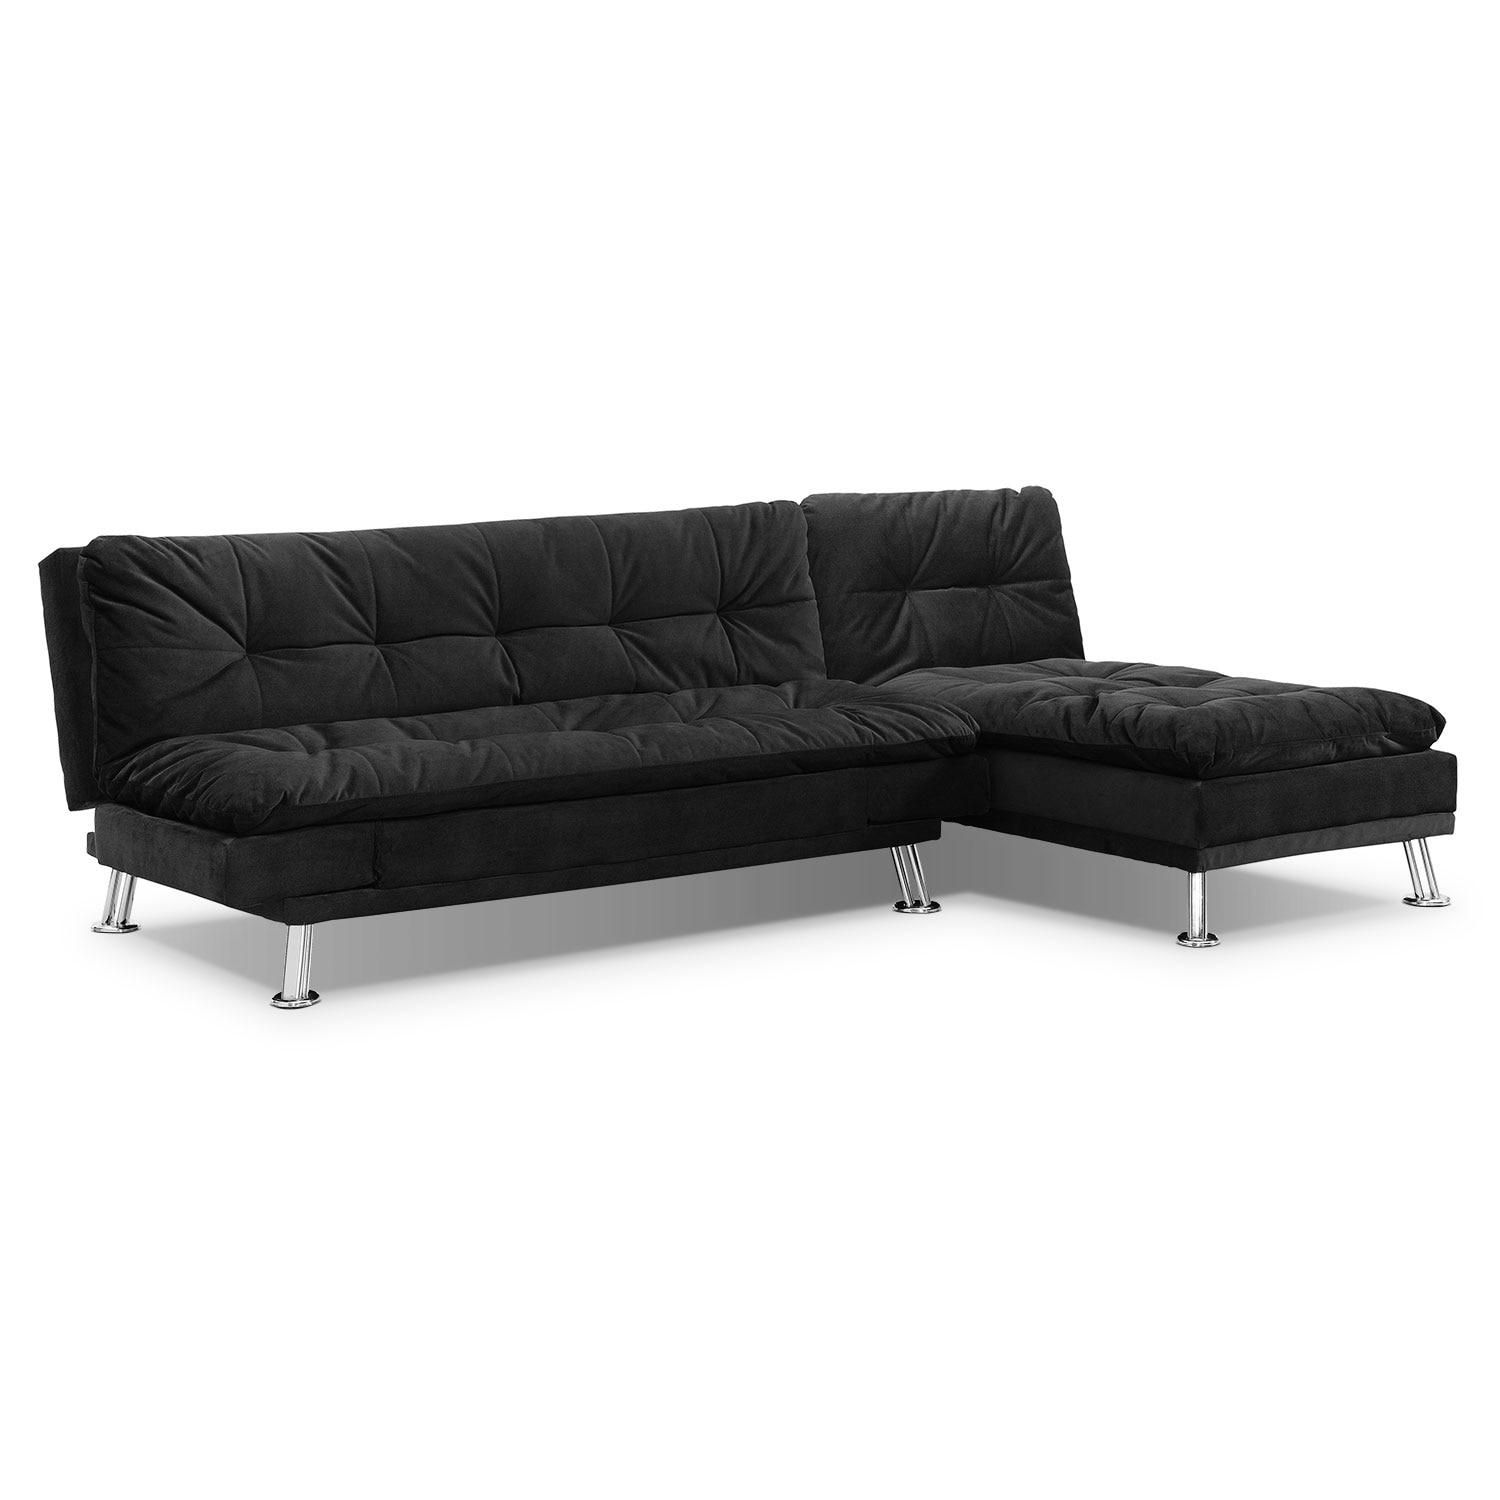 Waltz Futon Sofa Bed – Black | Value City Furniture For Small Black Futon Sofa Beds (View 11 of 20)